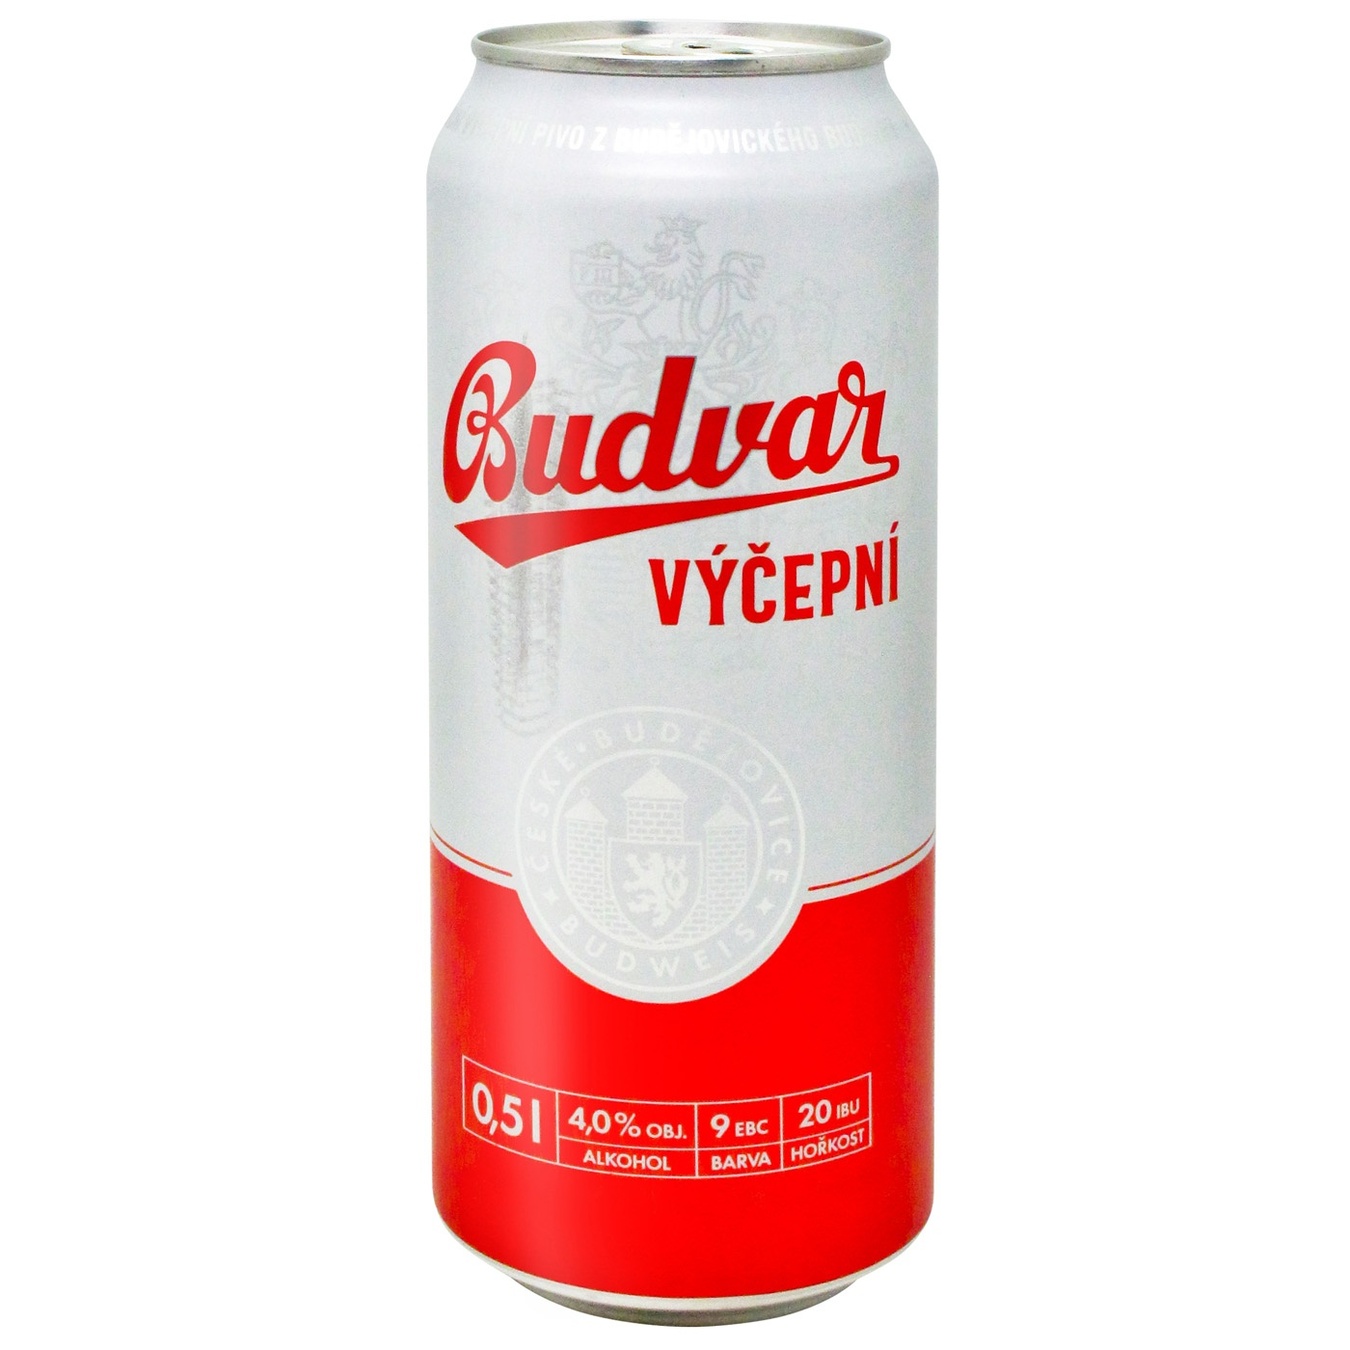 Budweiser Vycepni light Beer 4% 0.5 l